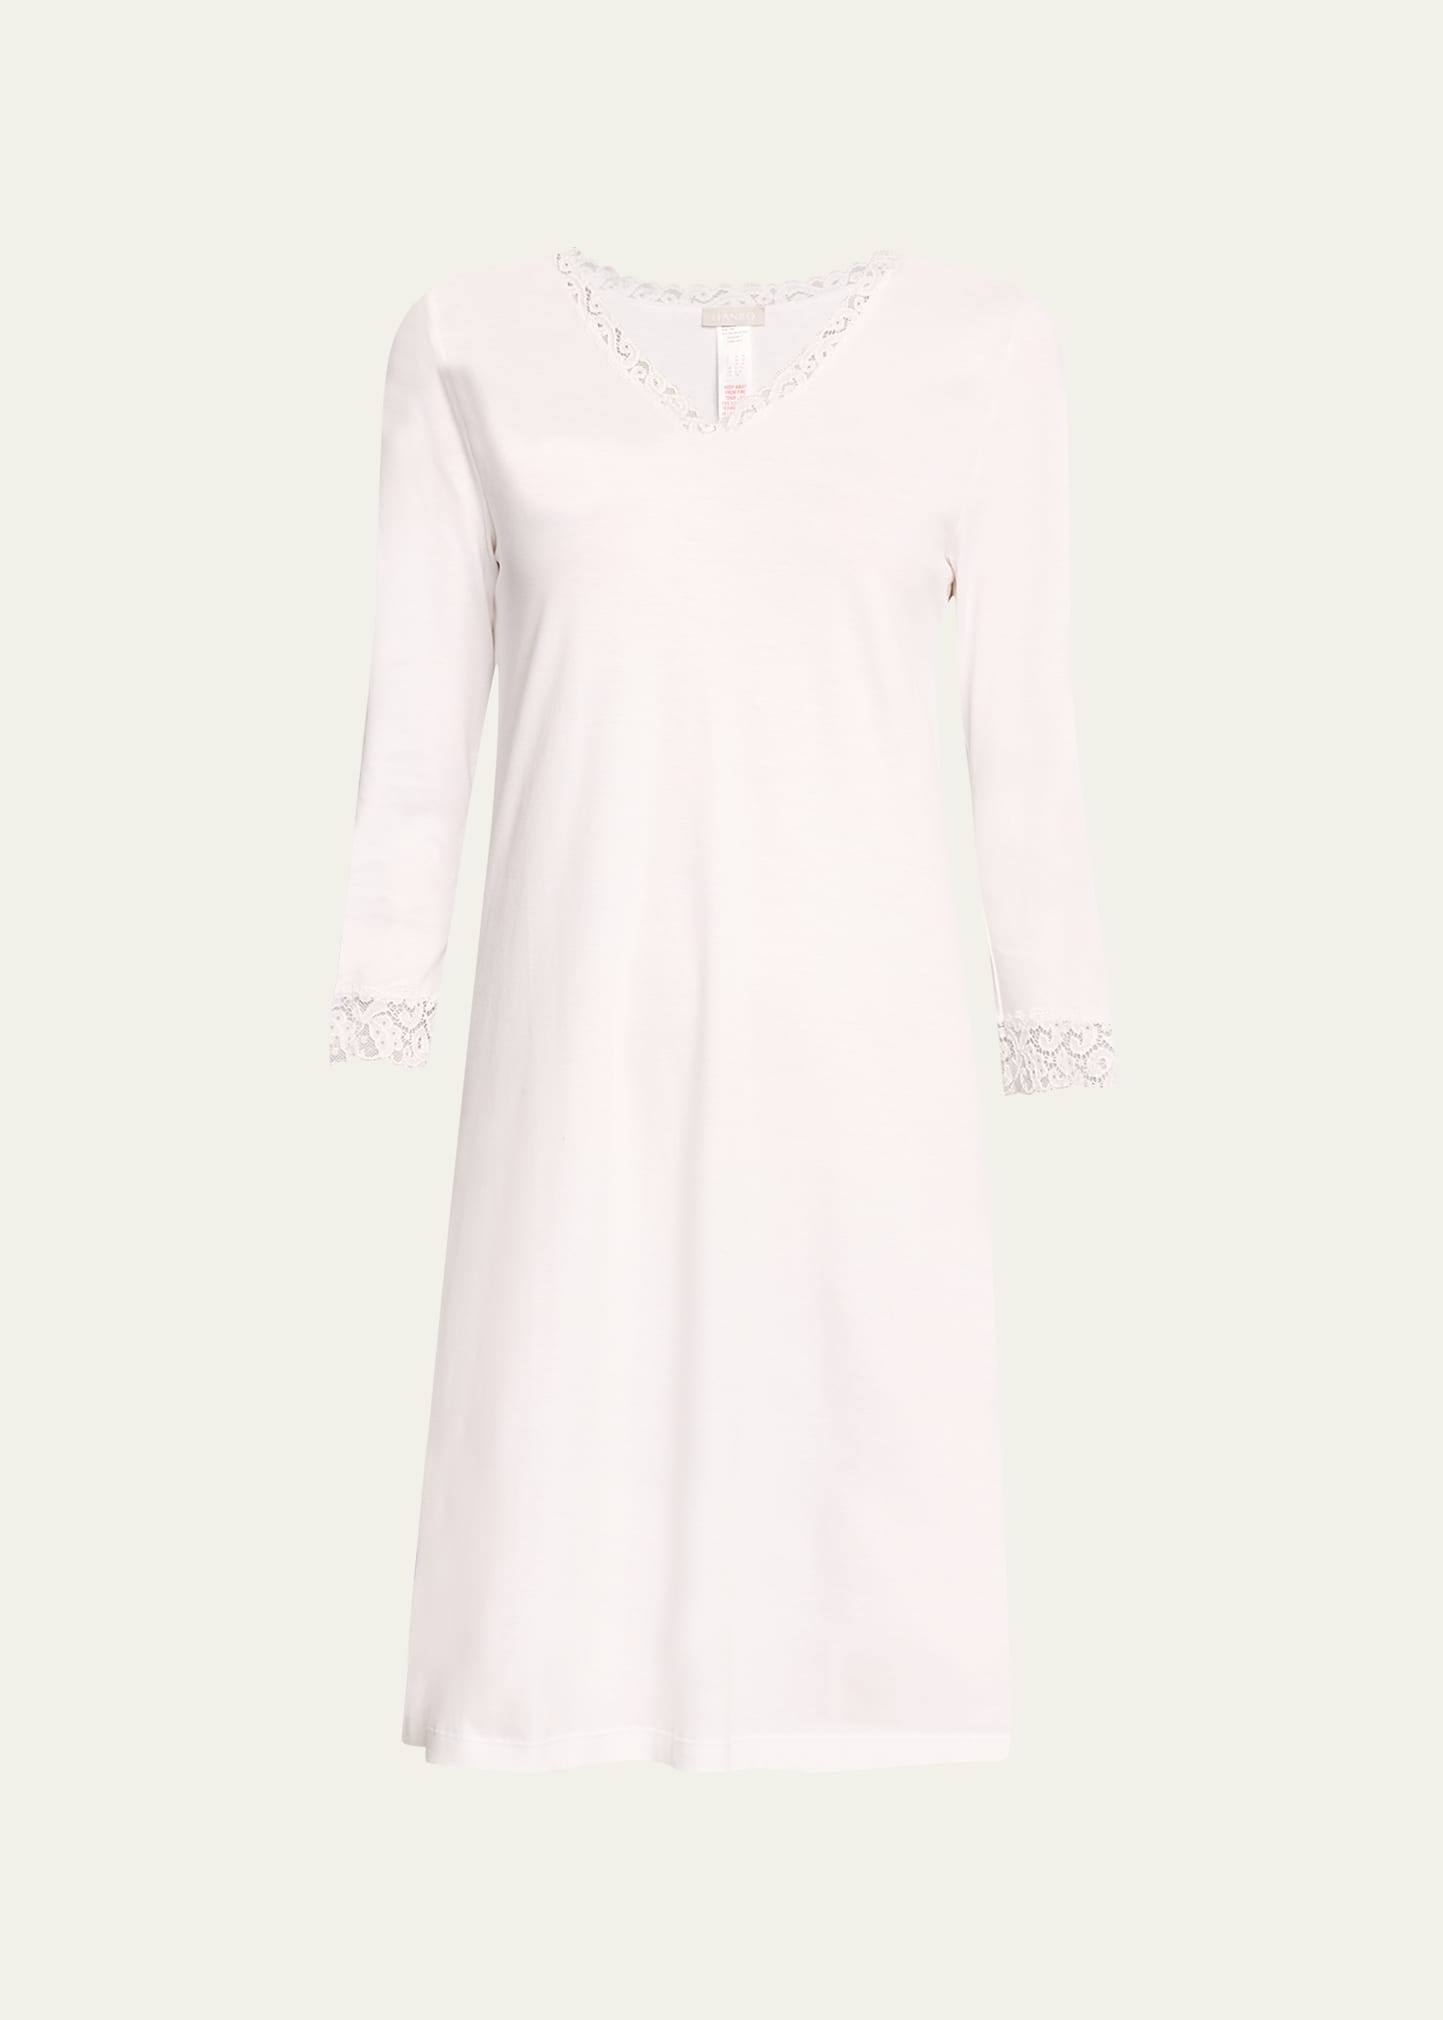 Hanro Moments Lace-trim Cotton Nightgown In White